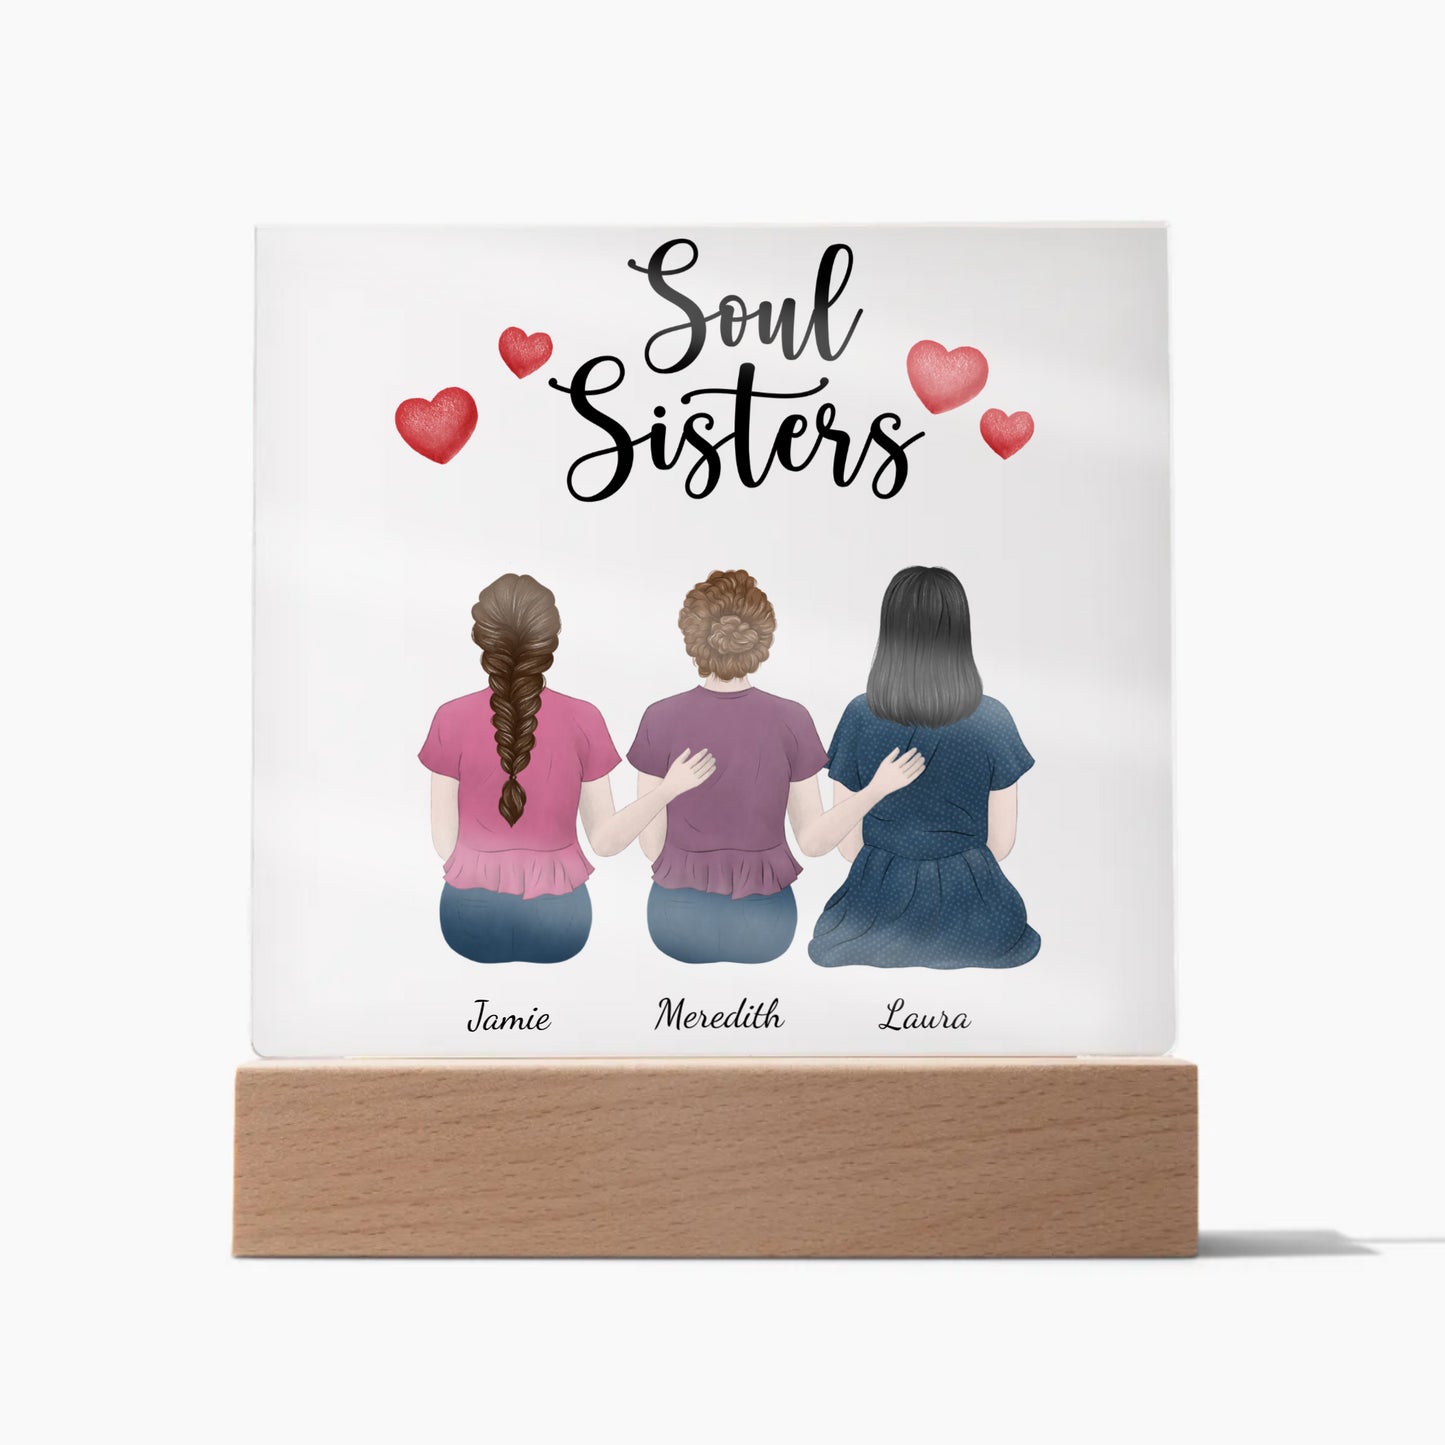 Soul Sisters Acrylic Square Plaque